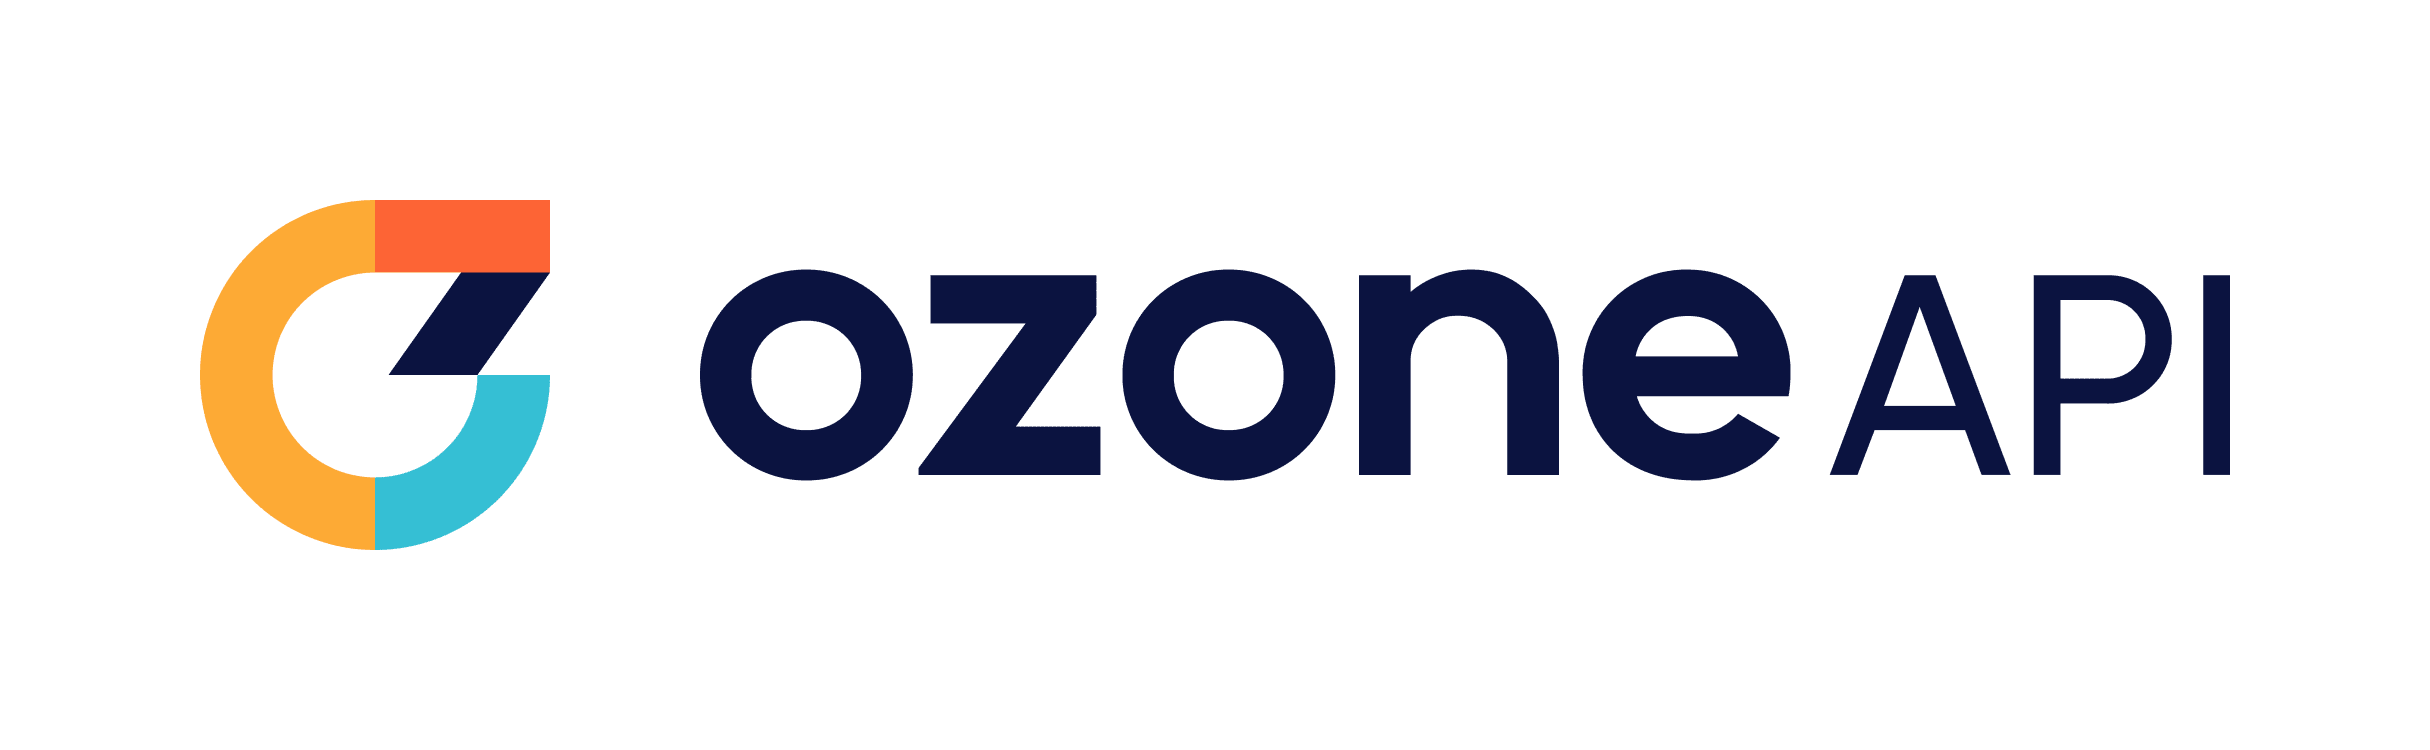 ozone api logo